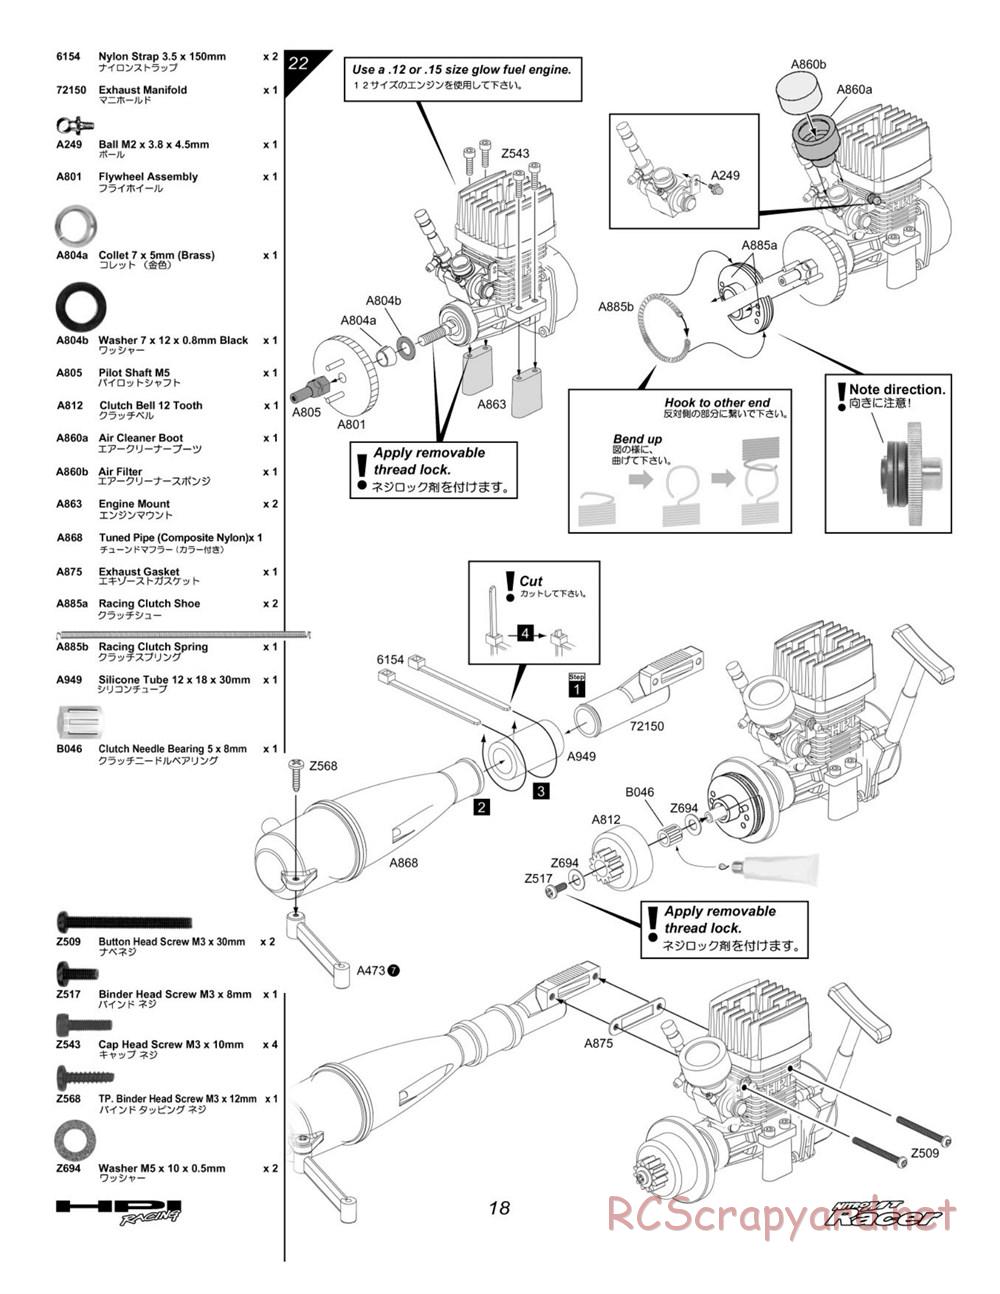 HPI - Nitro MT Racer - Manual - Page 18